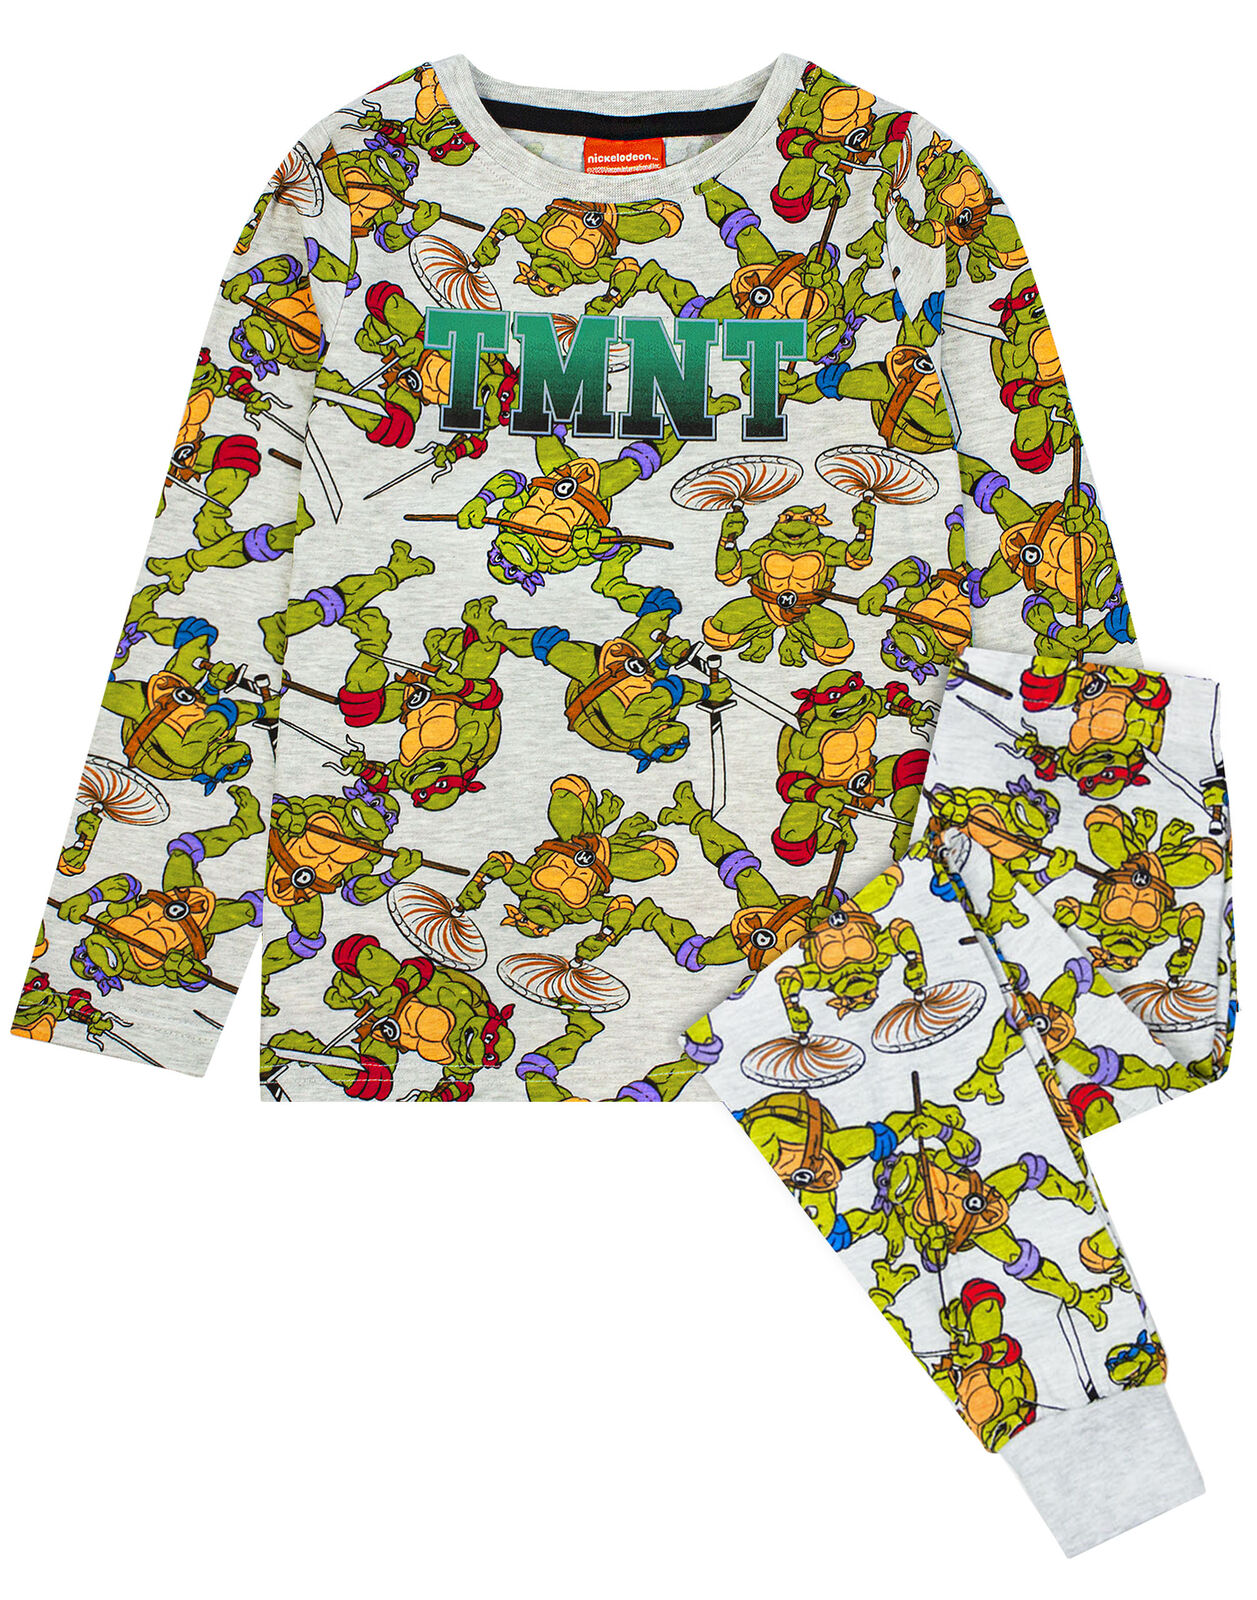 Teenage Mutant Ninja Turtles All Over Print Boy's Kids Pajamas Set 6-7 Years